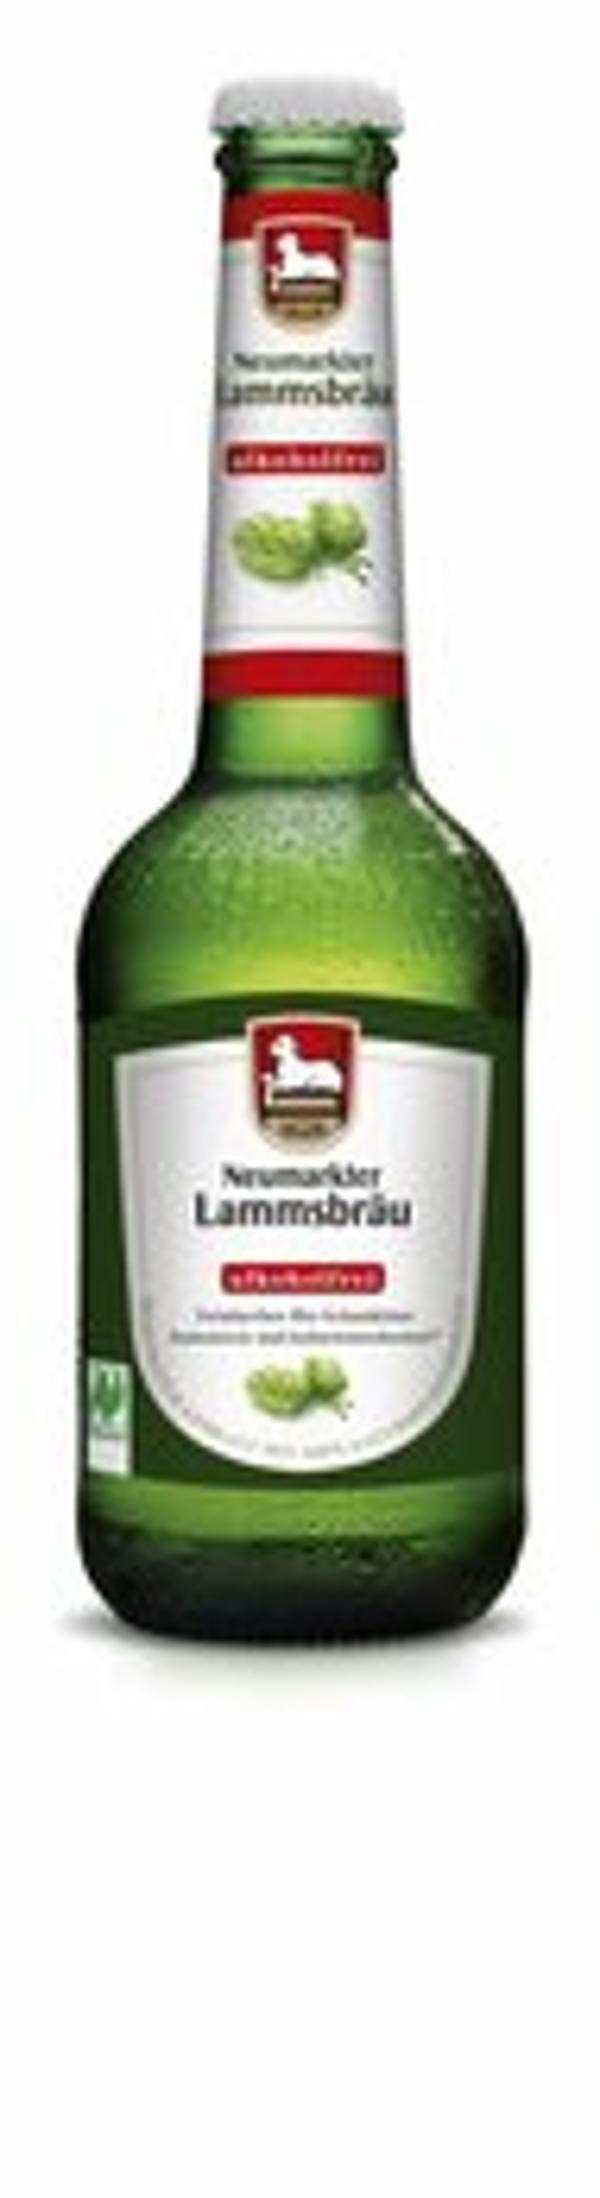 Produktfoto zu Lamms alkoholfrei, 10x0,33 l